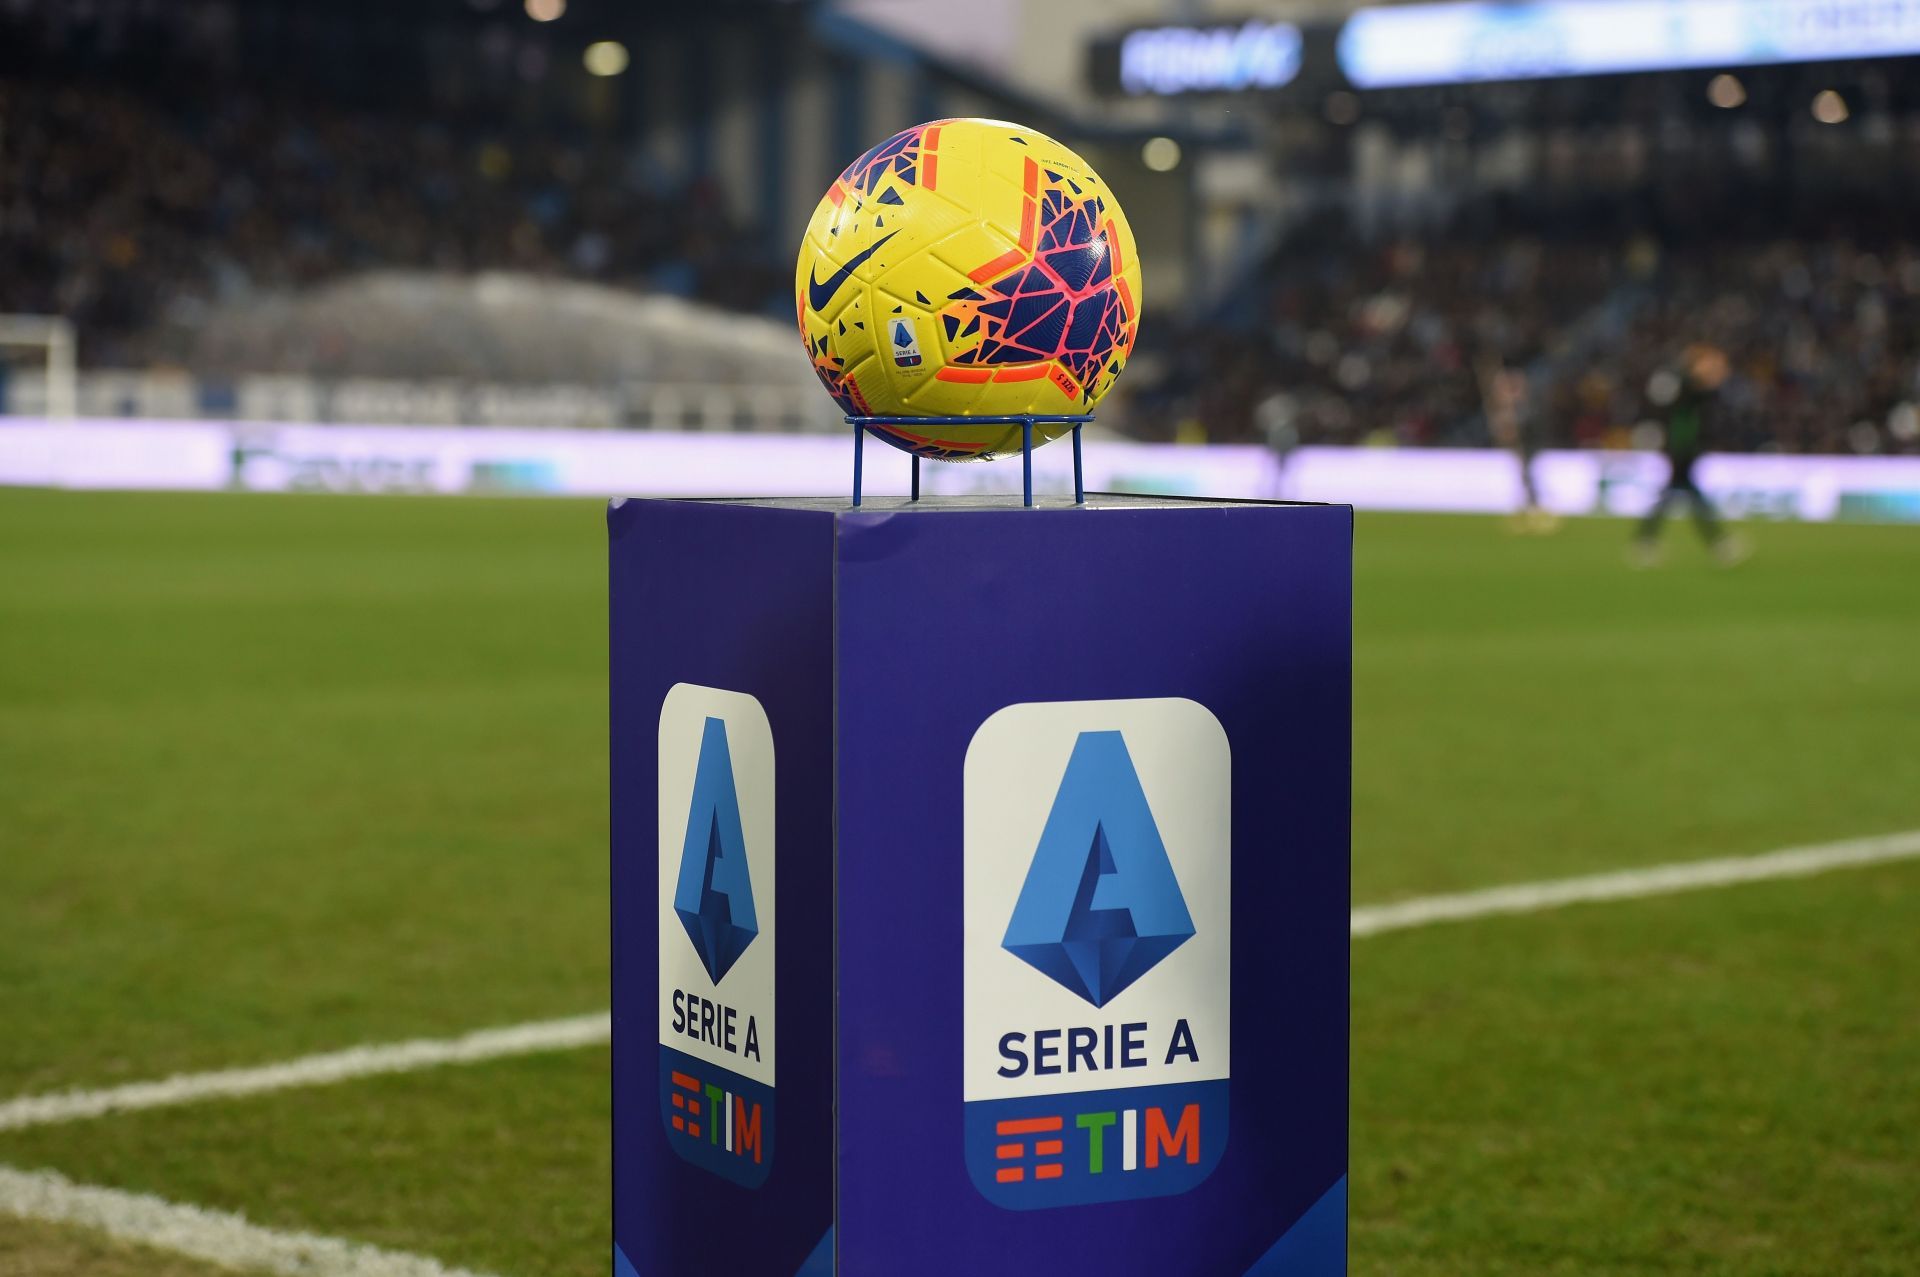 The Italian Serie A, 2022-23 [Image for Representational purposes]